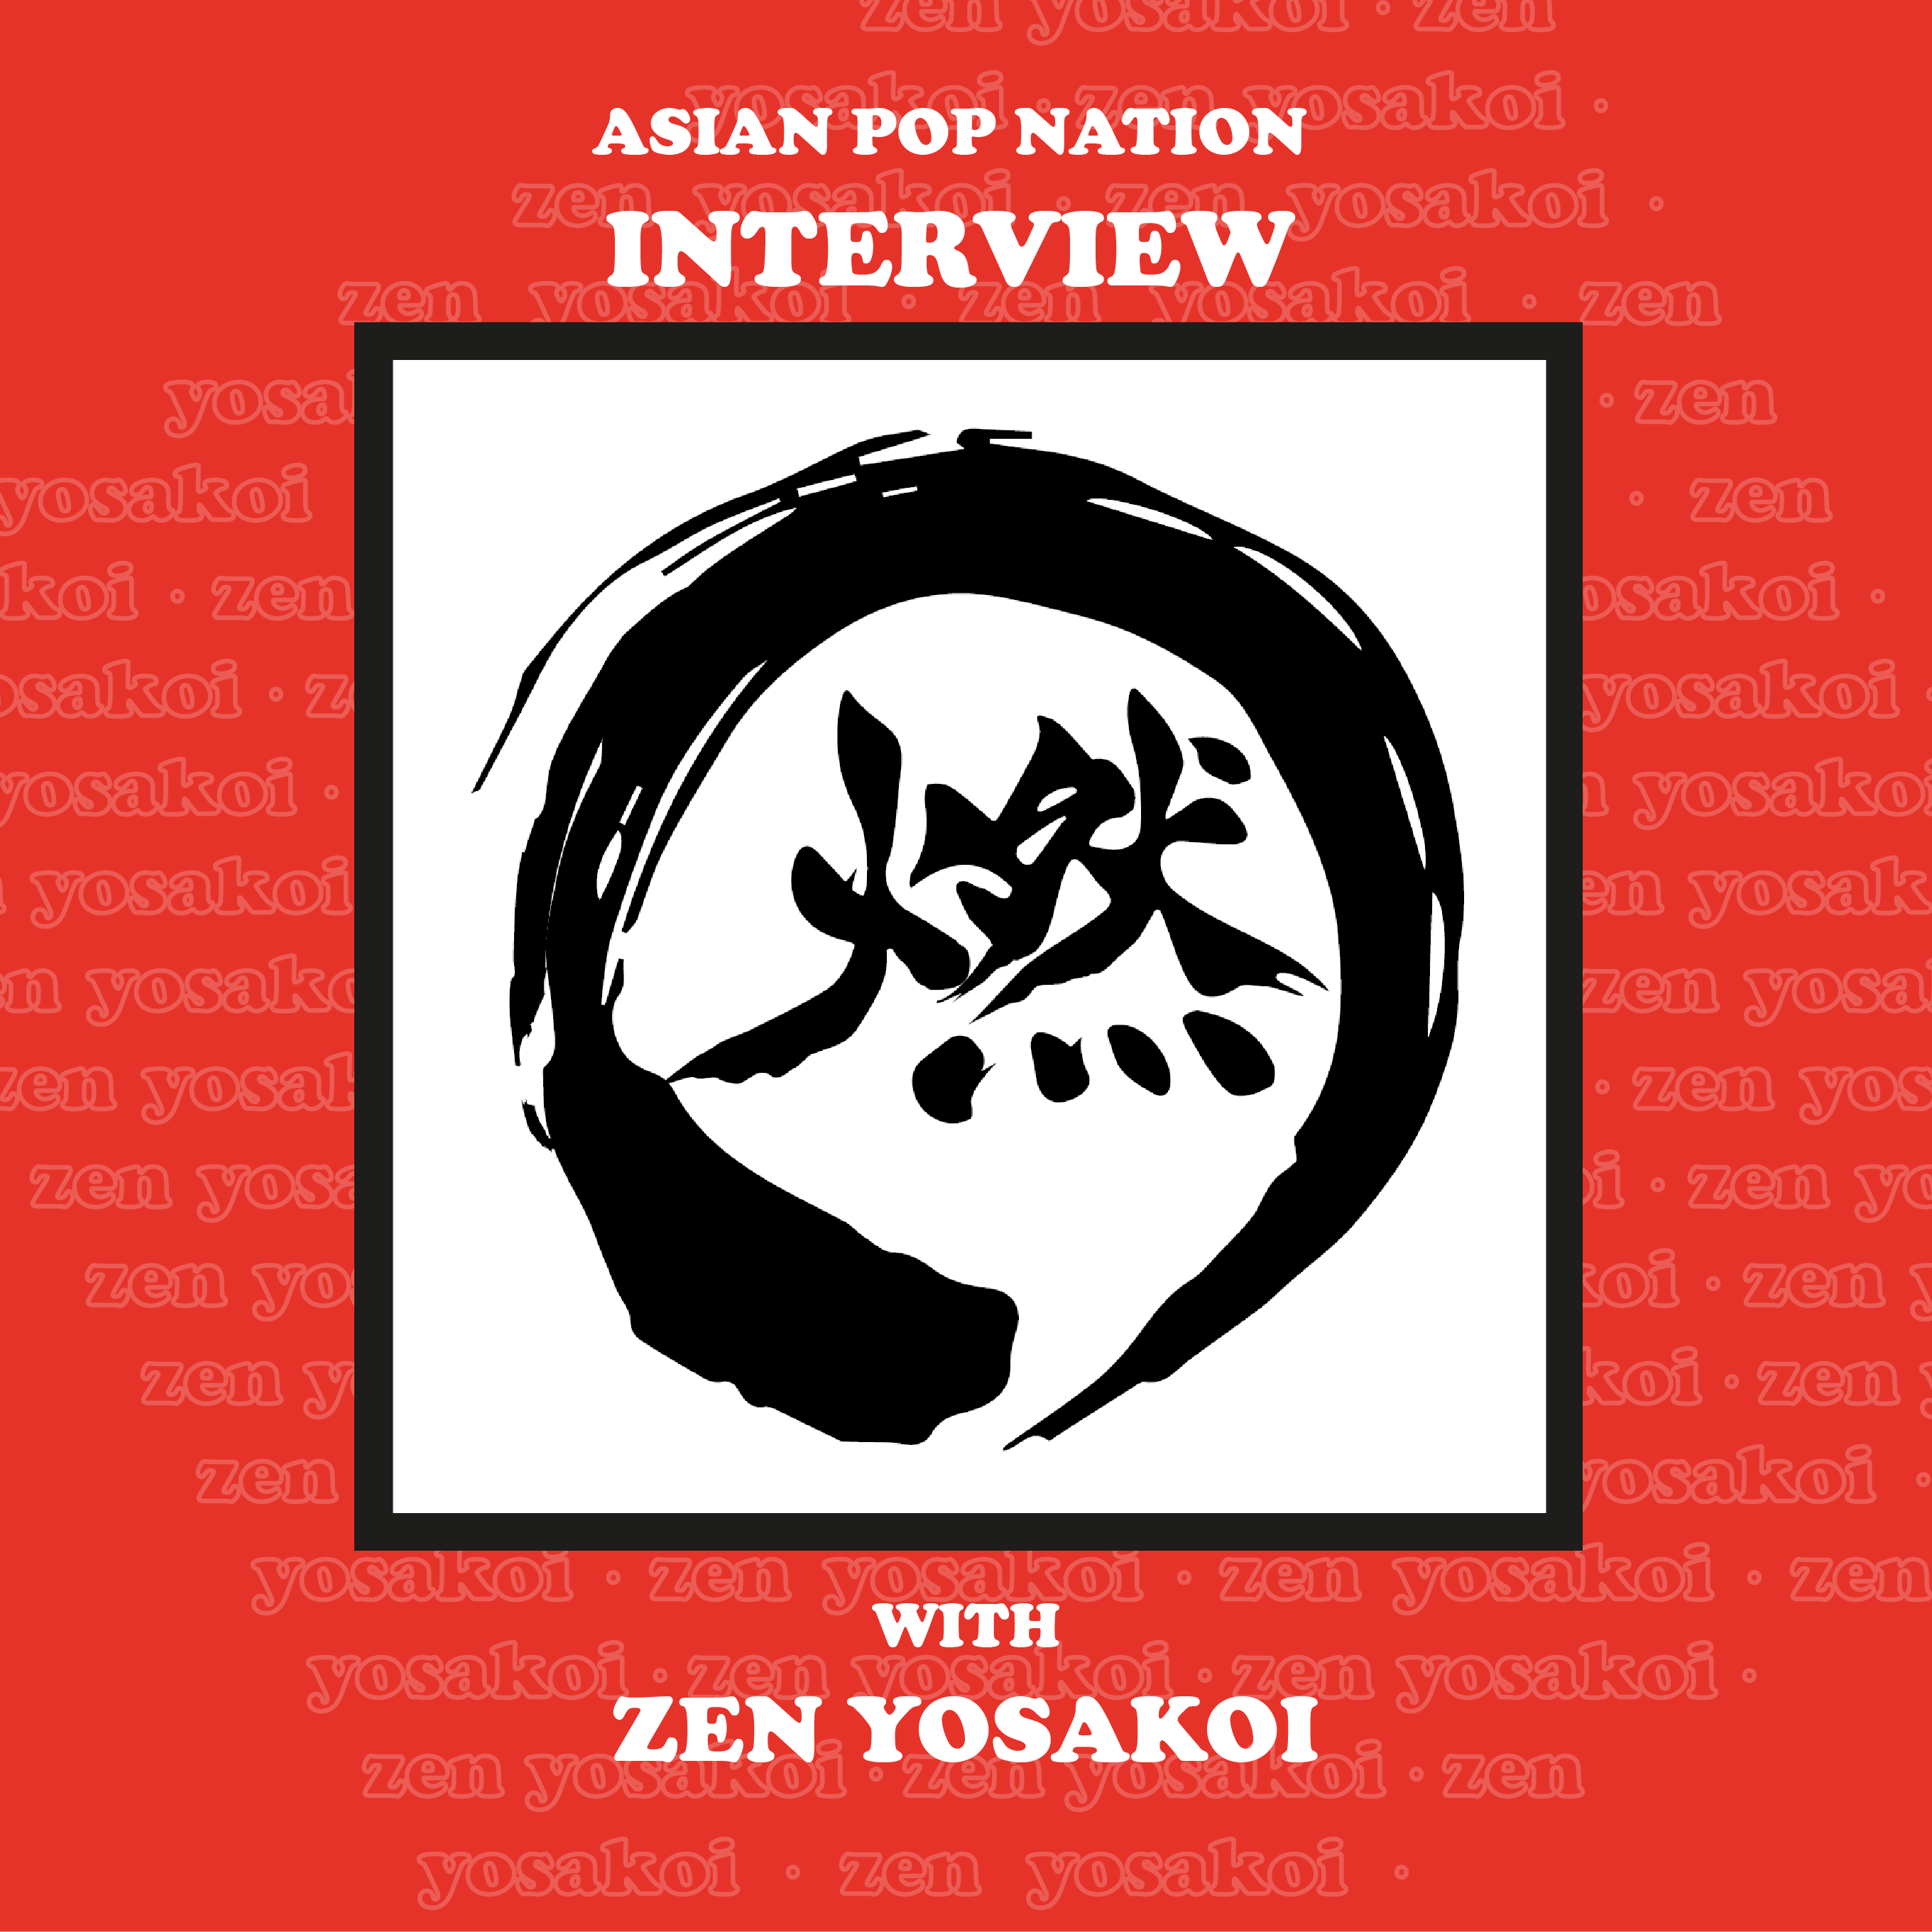 APN's Interview with Zen Yosakoi